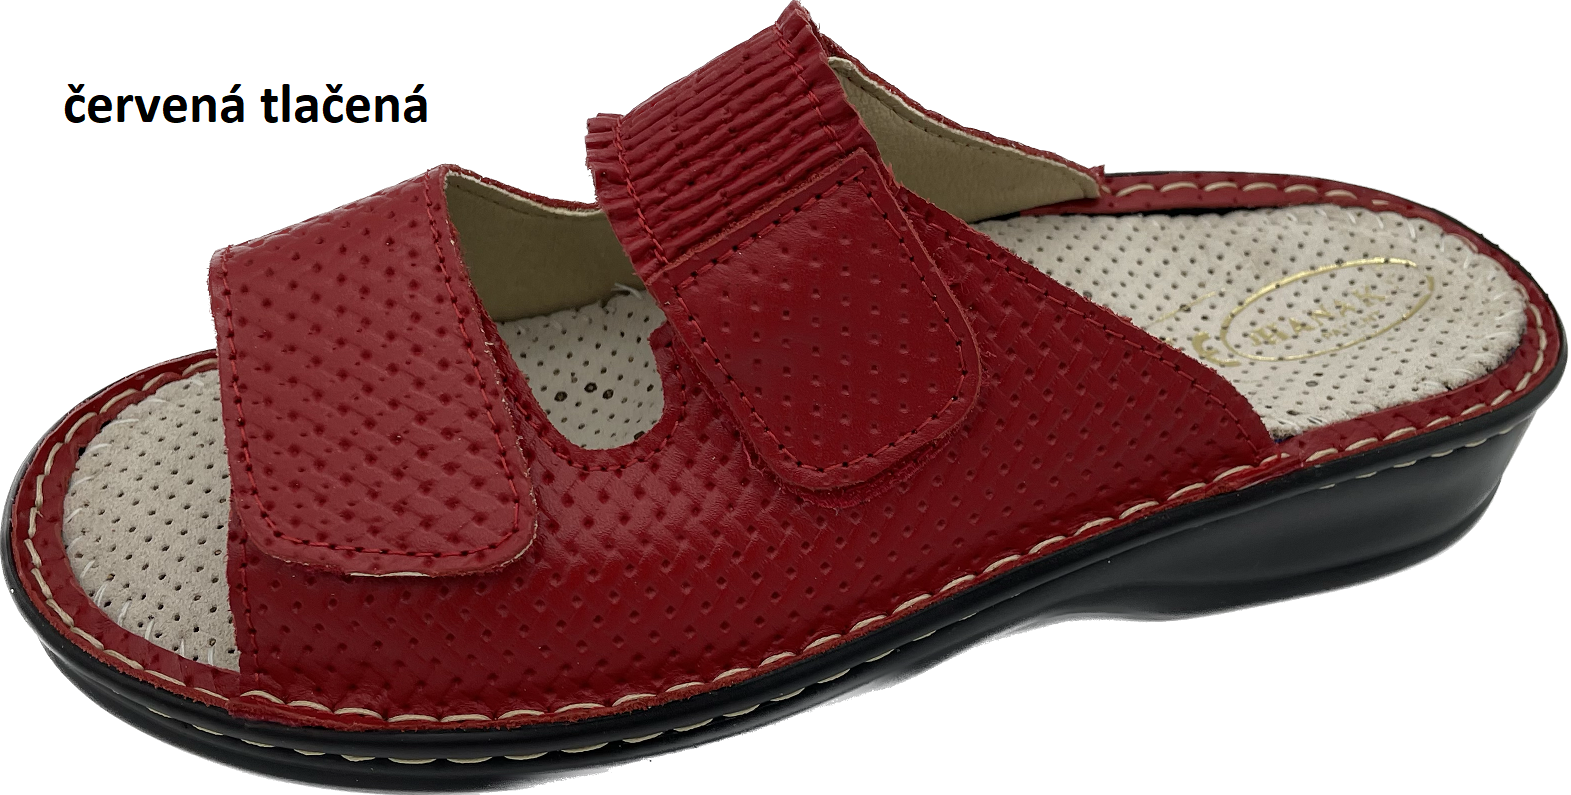 Boty Hanák vzor 304 - černá podešev Barva usně: červená tlačená, Velikosti obuvi: 42